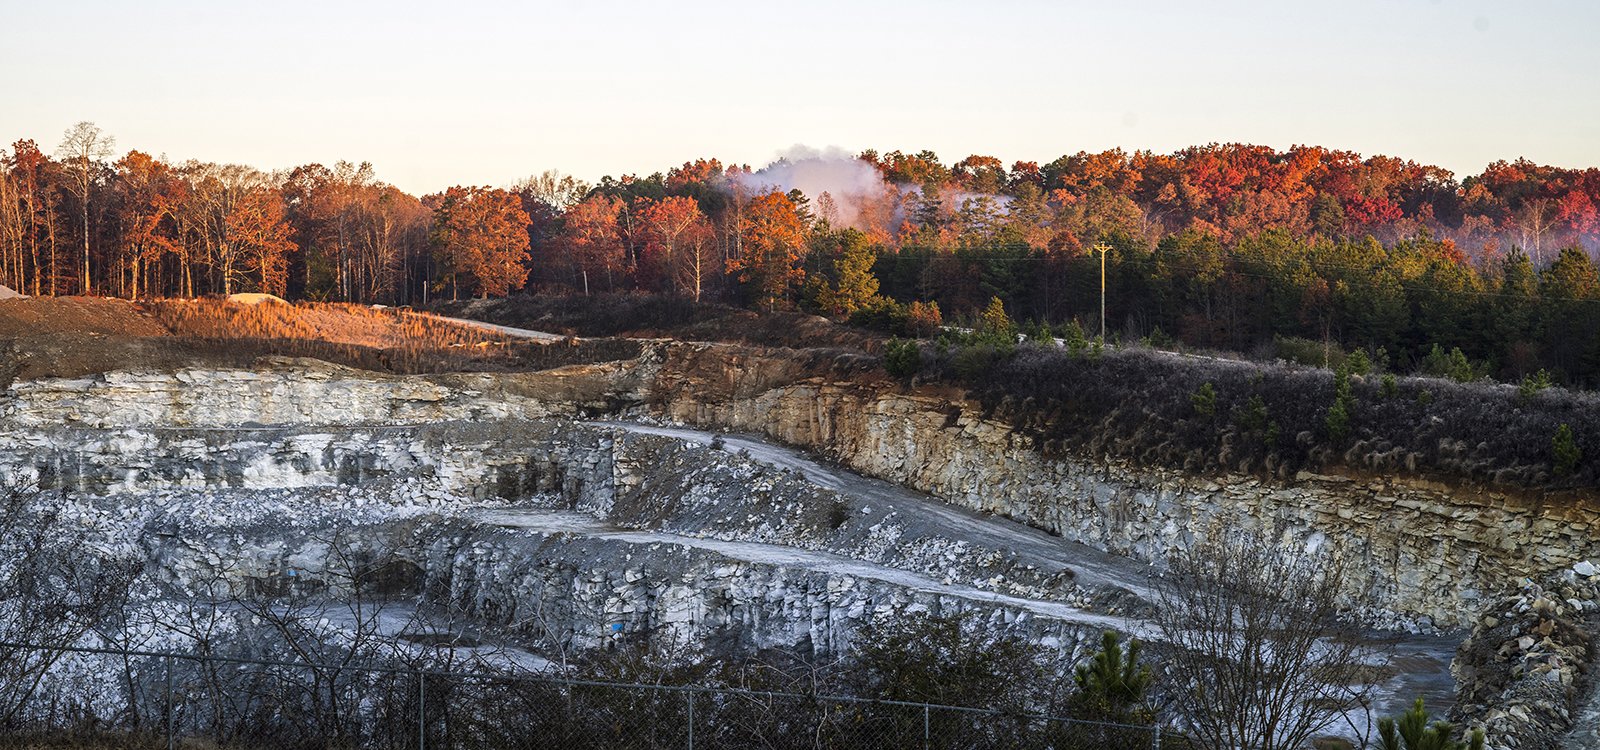 The quarry produces blue granite, South Carolina’s state rock.